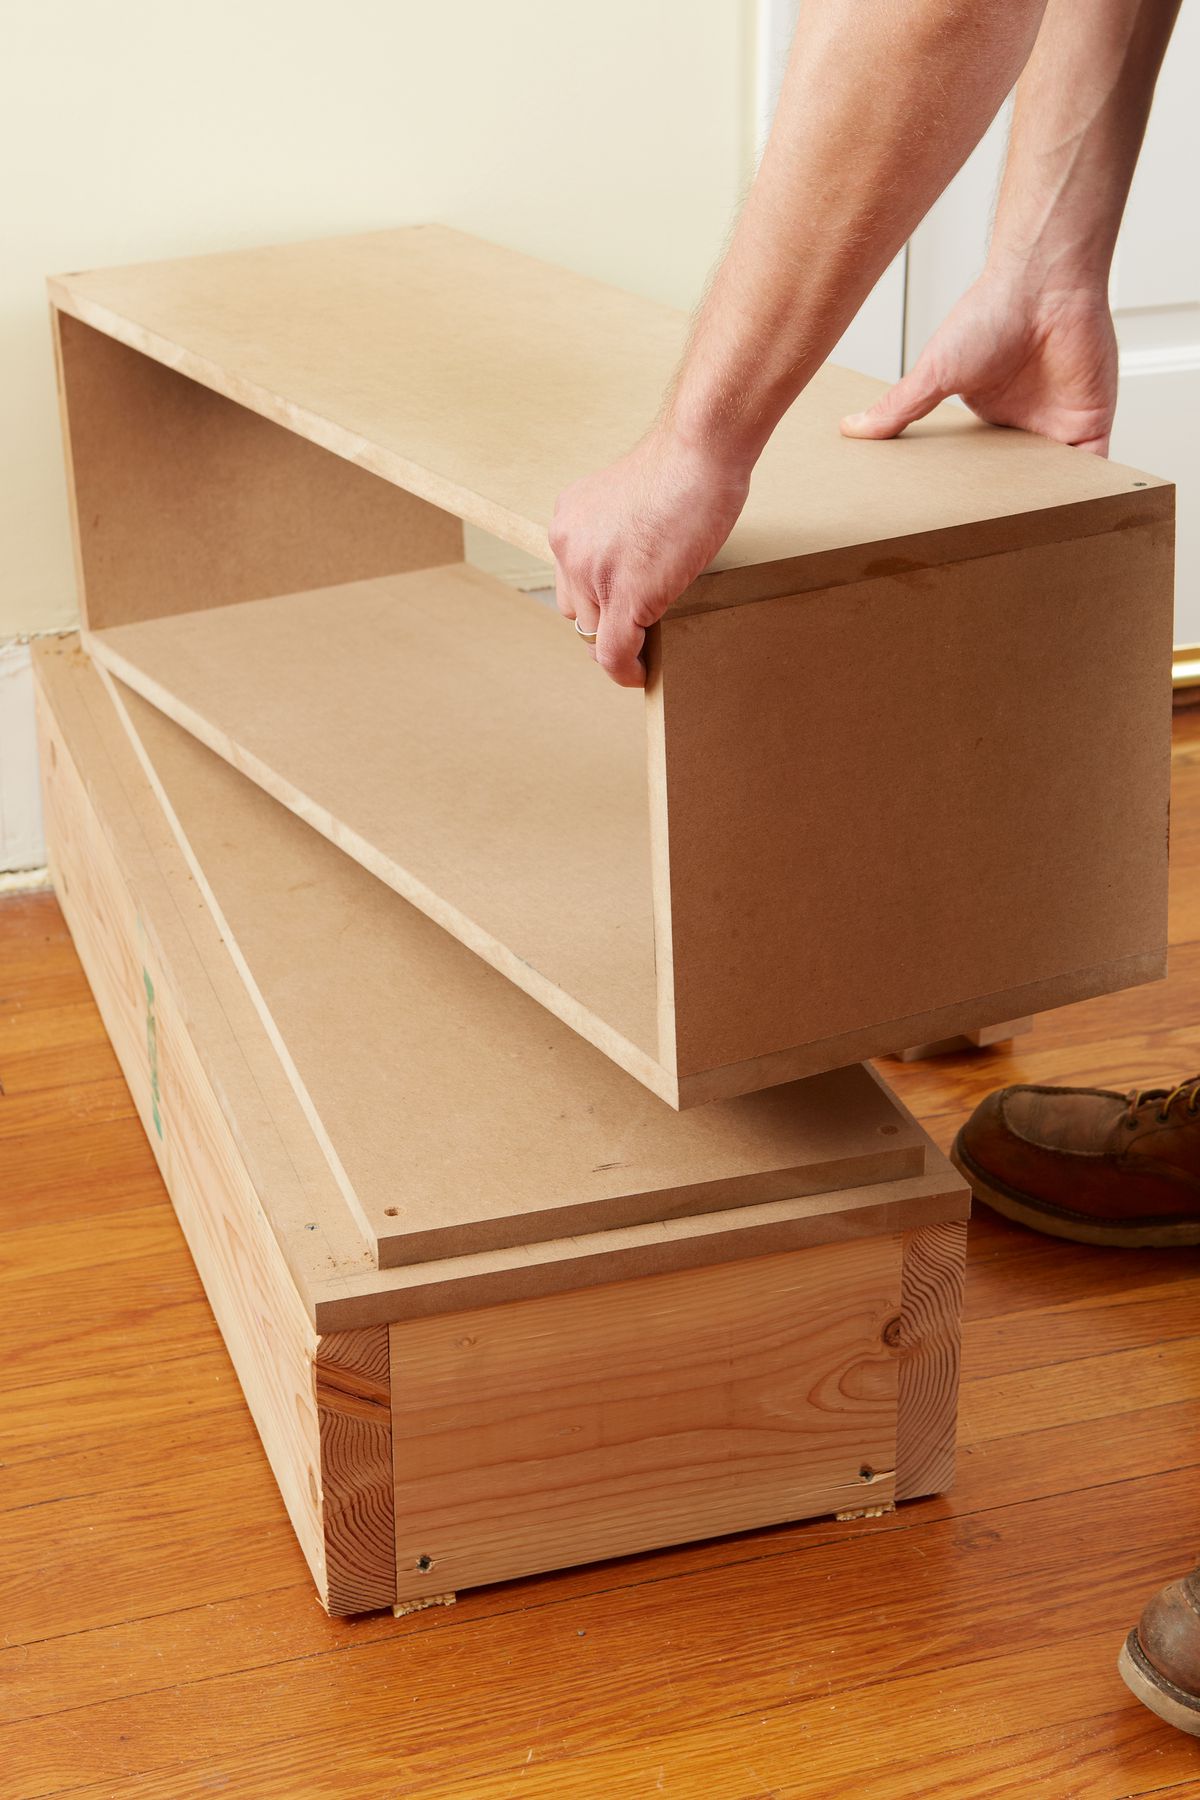 Man Stacks Boxes To Make Room Divider